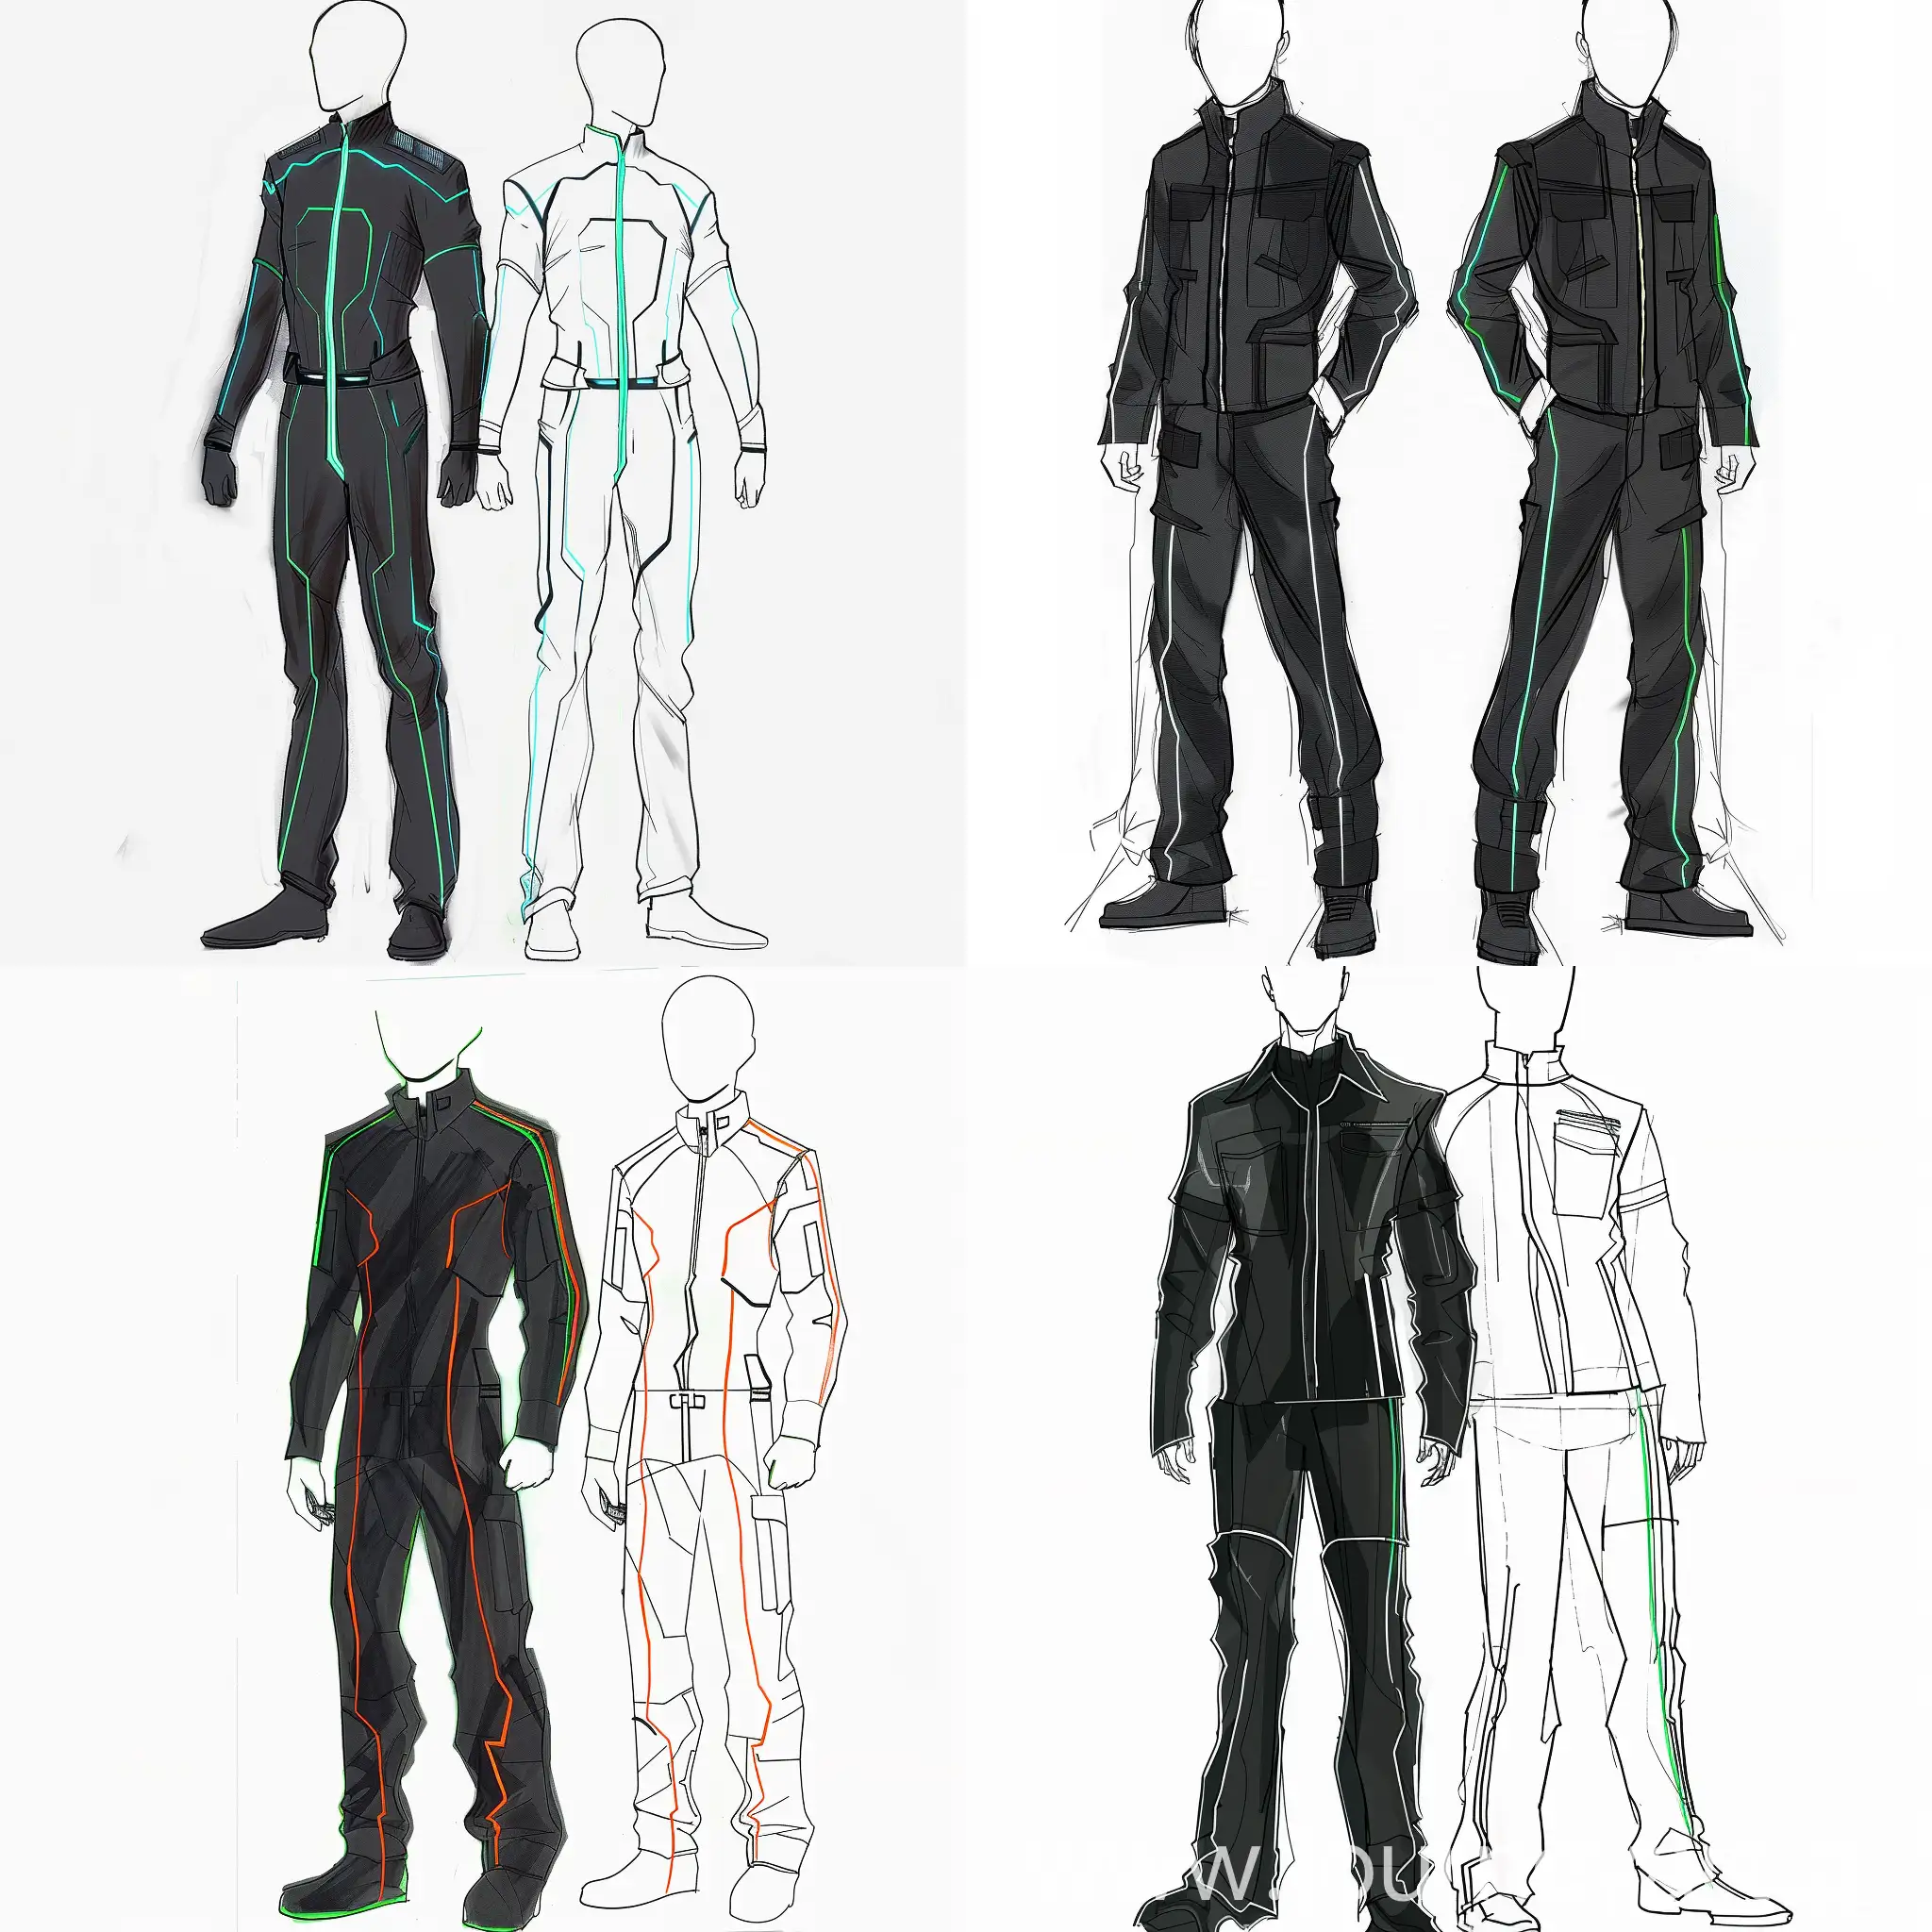 Futuristic-Mens-Fashion-Sketch-inspired-by-Tron-Legacy